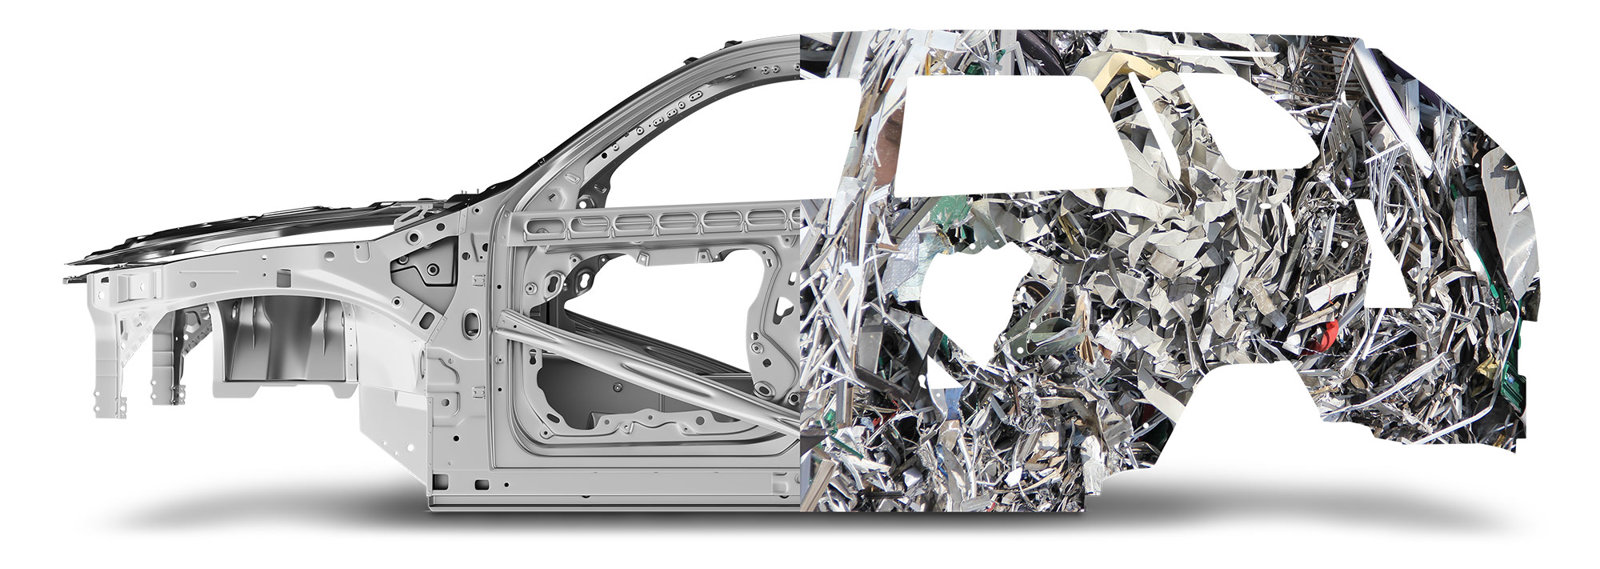 aluminium chassis and recycled aluminium